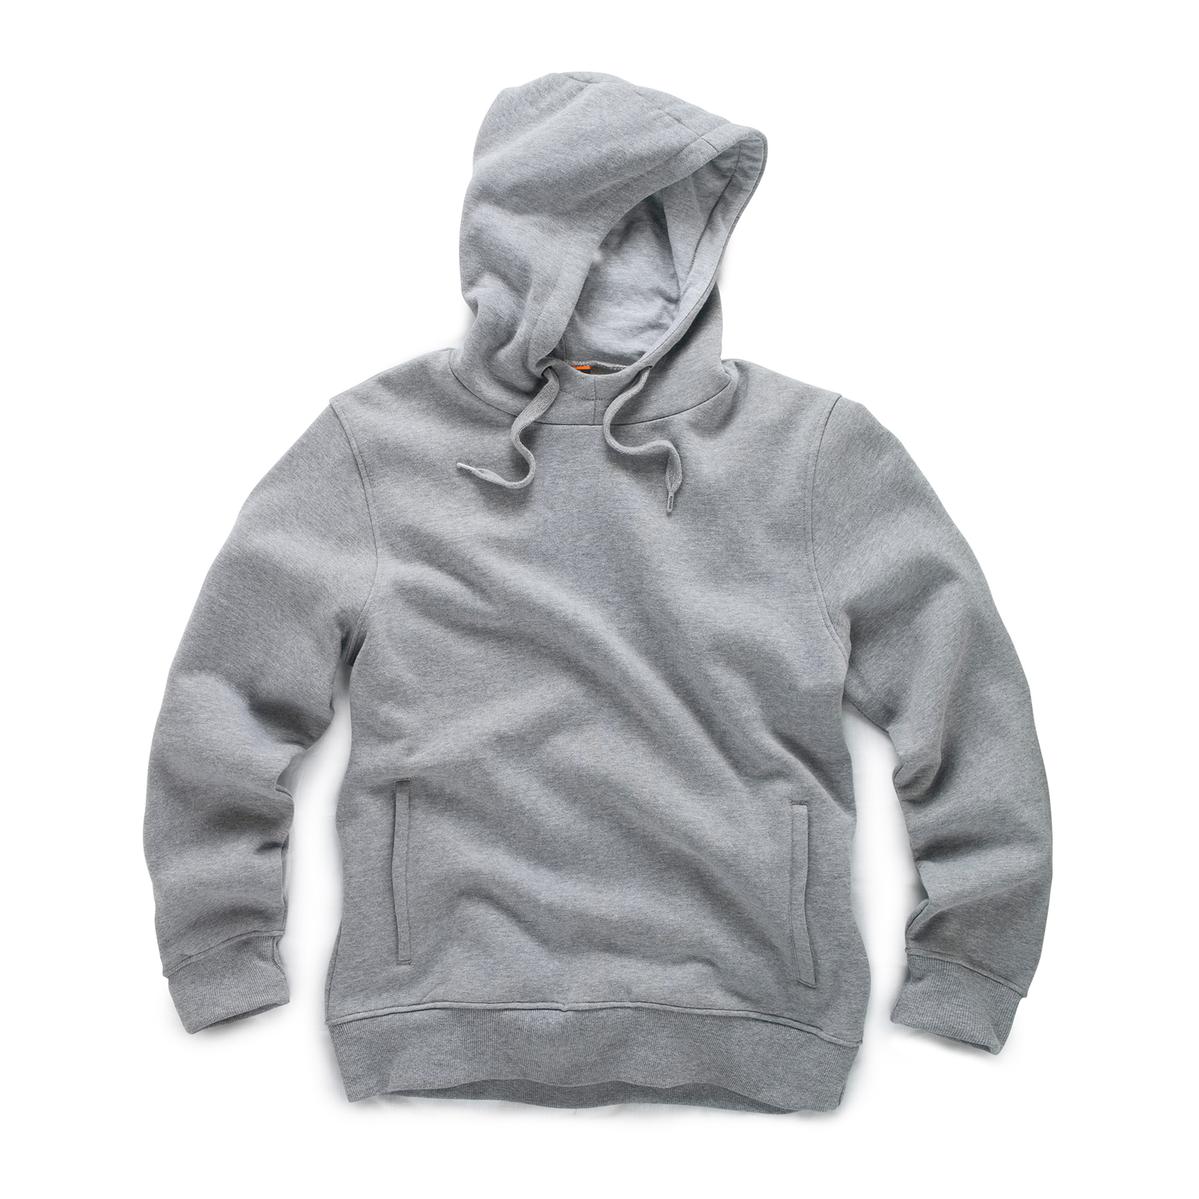 Scruffs Trade Work Hoodie Black Men's Sweatshirt XL Hooded Jumper Workwear Top